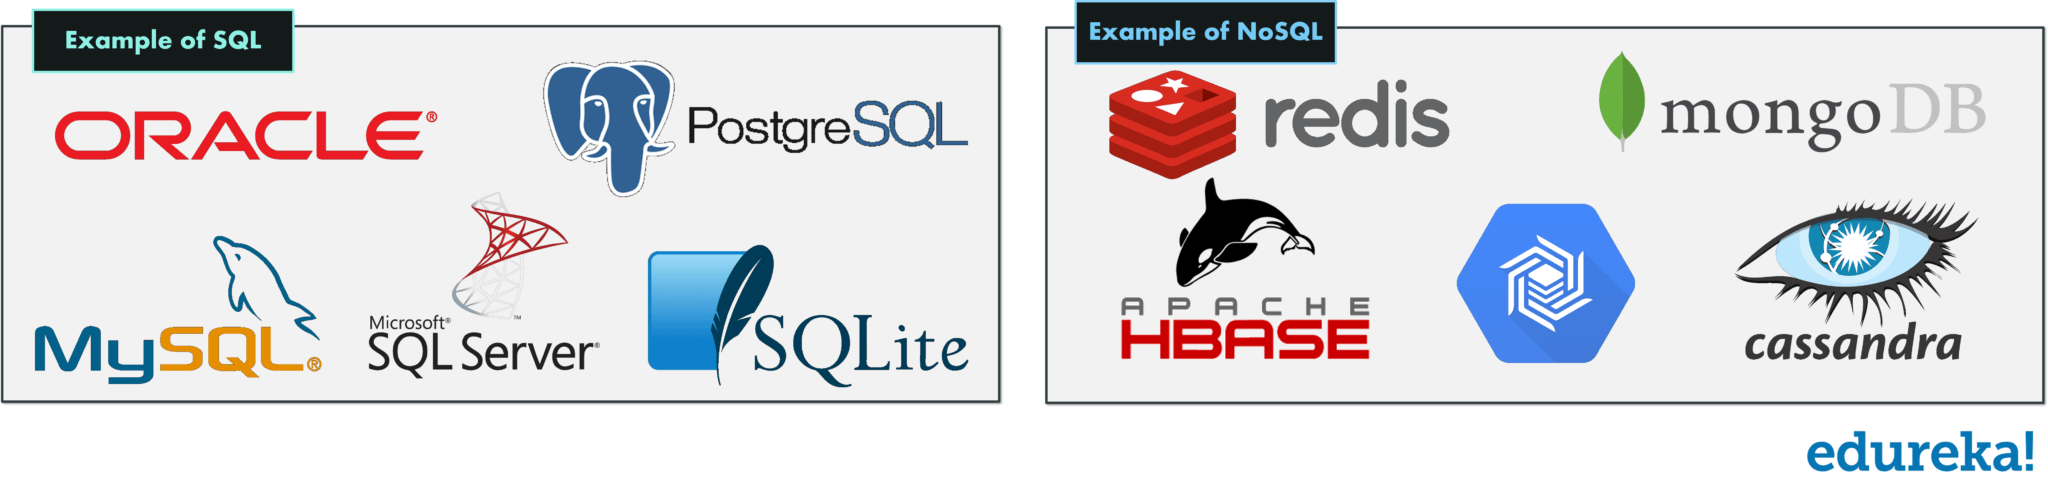 NoSQL Logo - SQL vs NoSQL Key Differences - MySQL vs MongoDB | Edureka